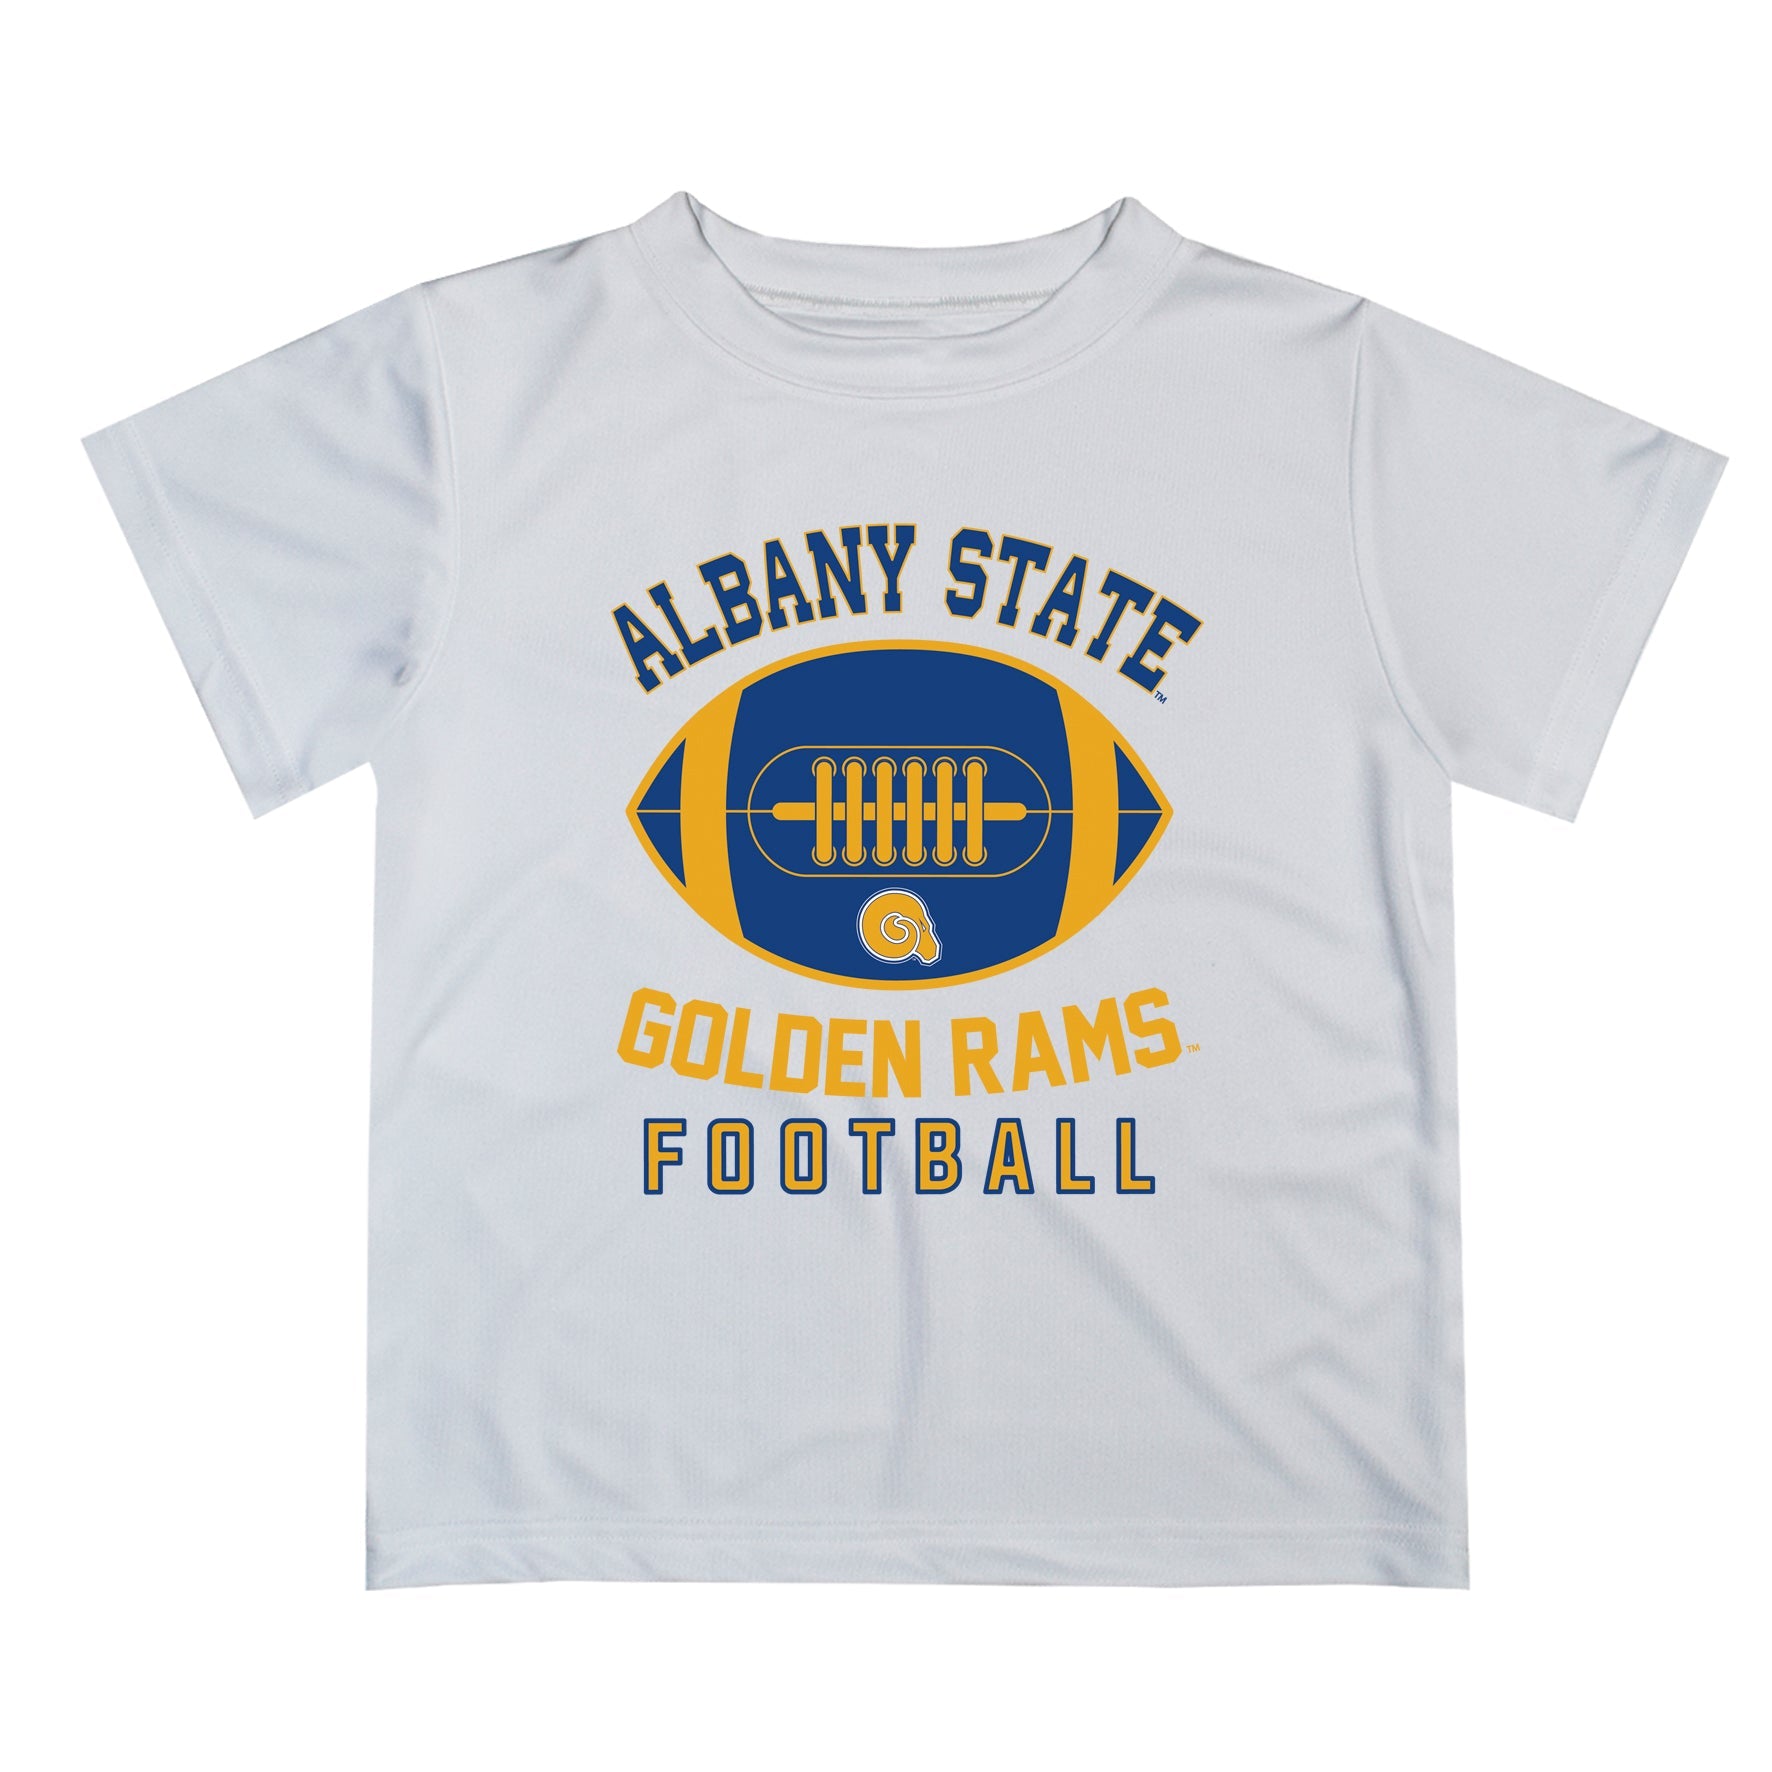 Vive La Fete Collegiate Albany State Rams Football White Short Sleeve Tee Shirt by Vive La Fete, White / Youth - M